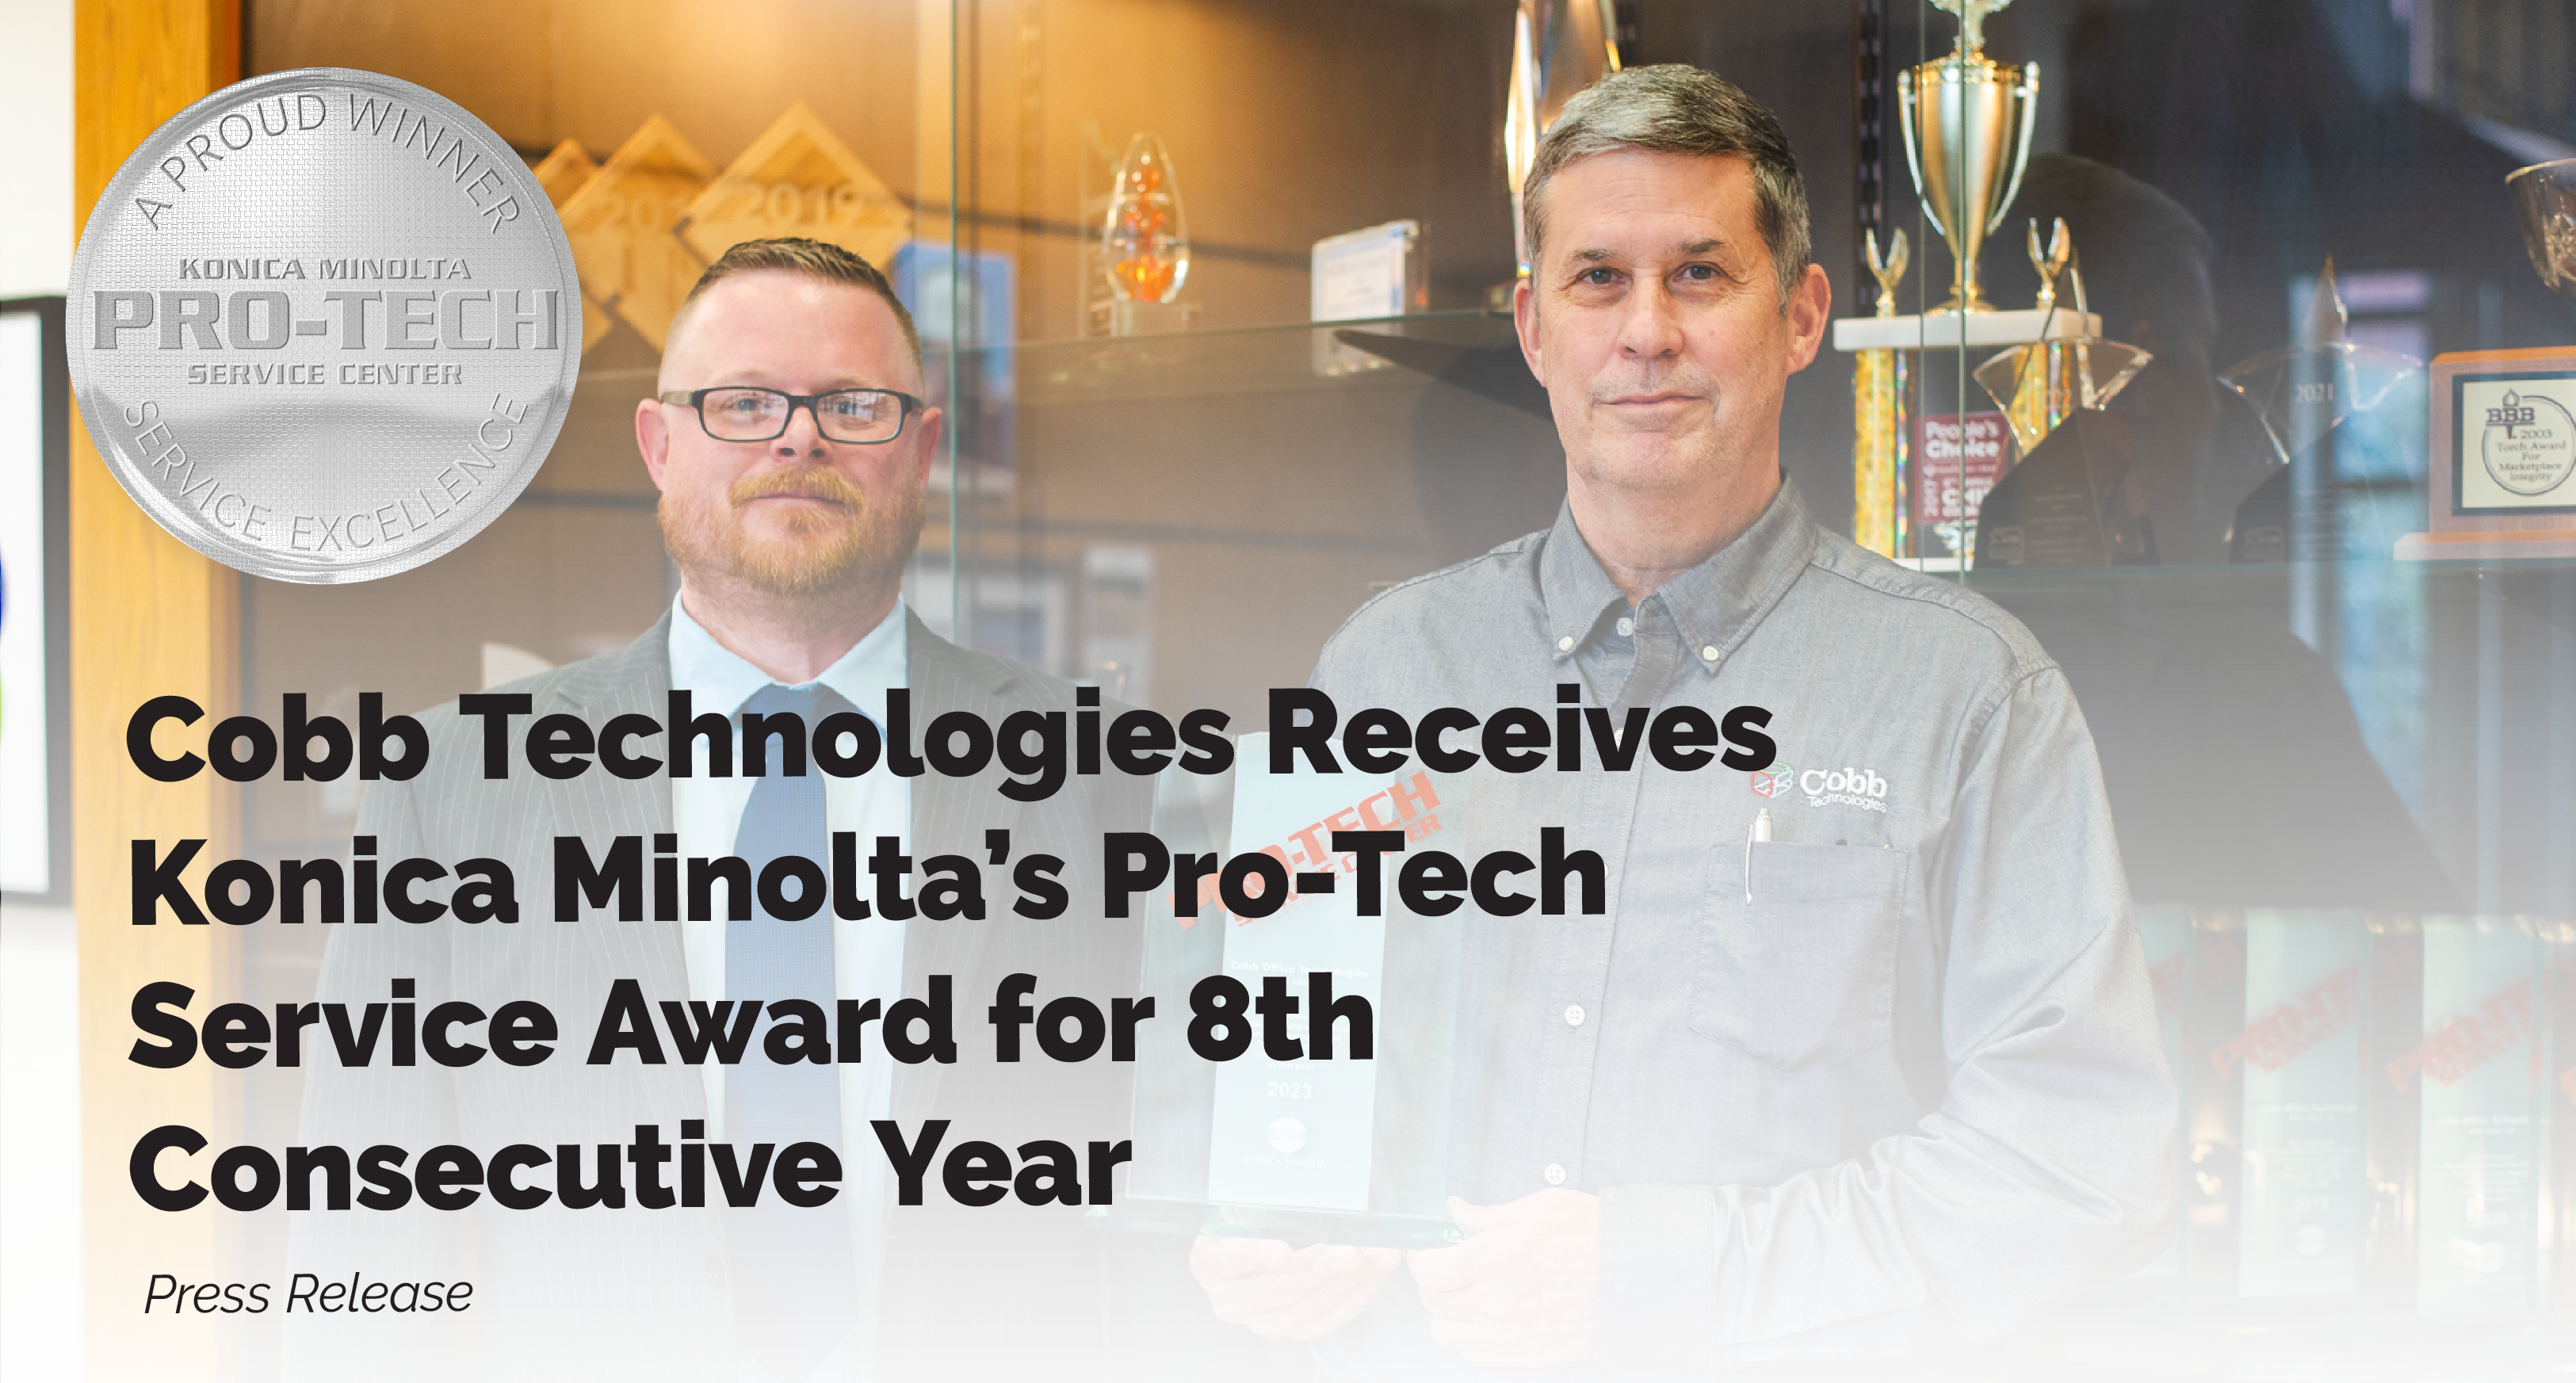 Cobb Technologies Receives Konica Minolta’s Pro-Tech Service Award for 8th Consecutive Year